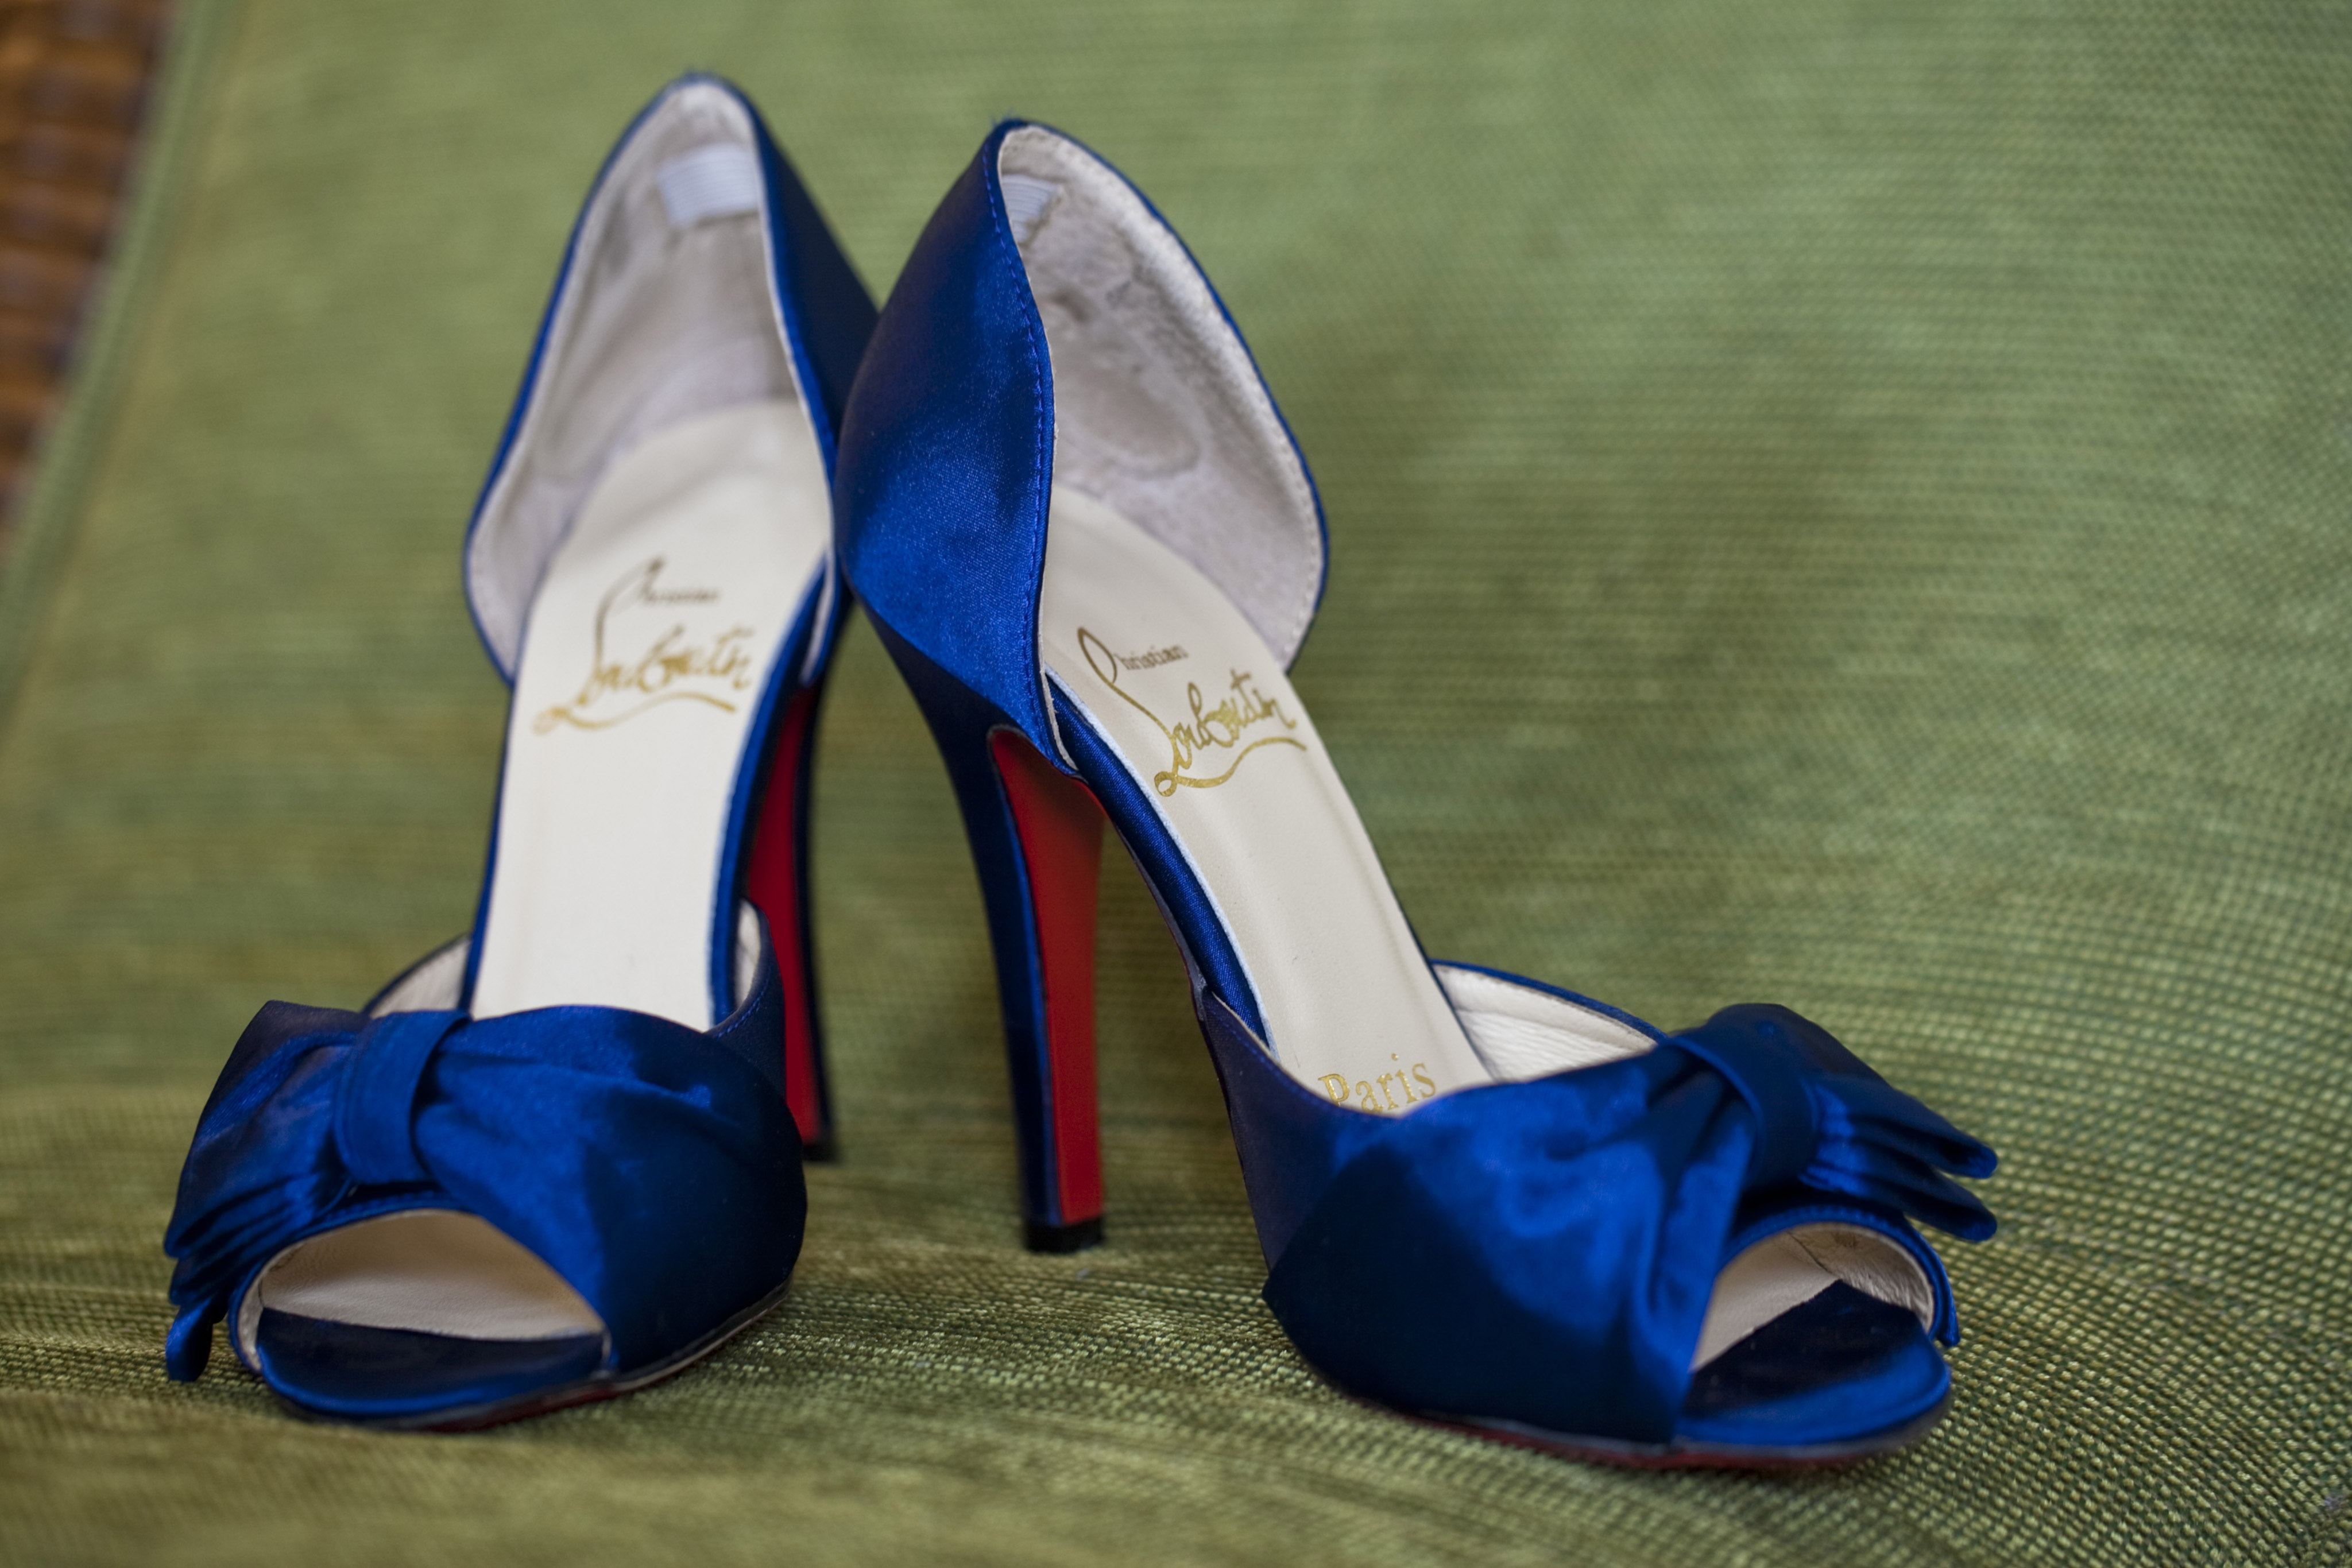 louboutin wedding shoes blue, Off 73%